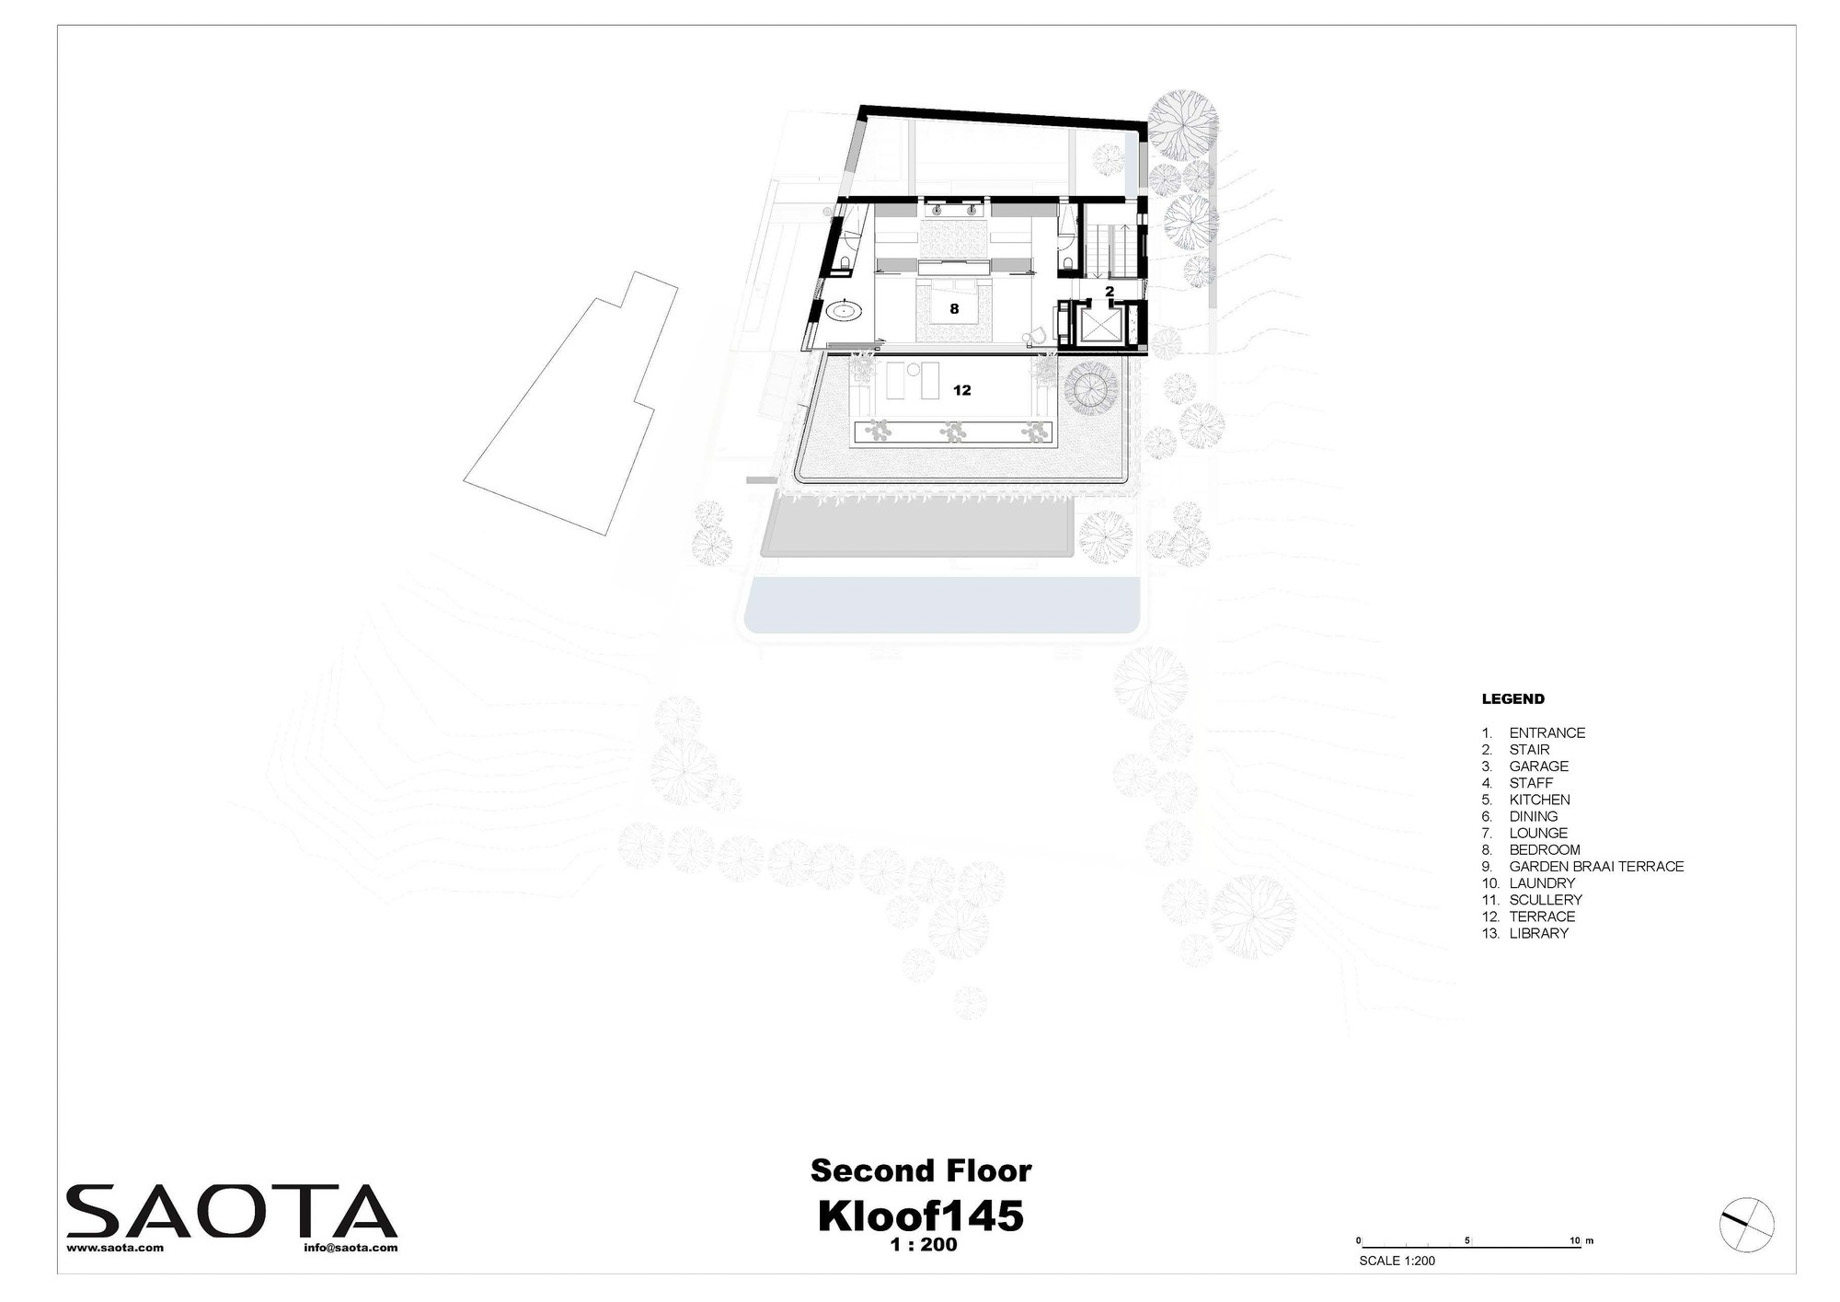 Floor Plans - Kloof 145 SAOTA House - Clifton, Cape Town, South Africa